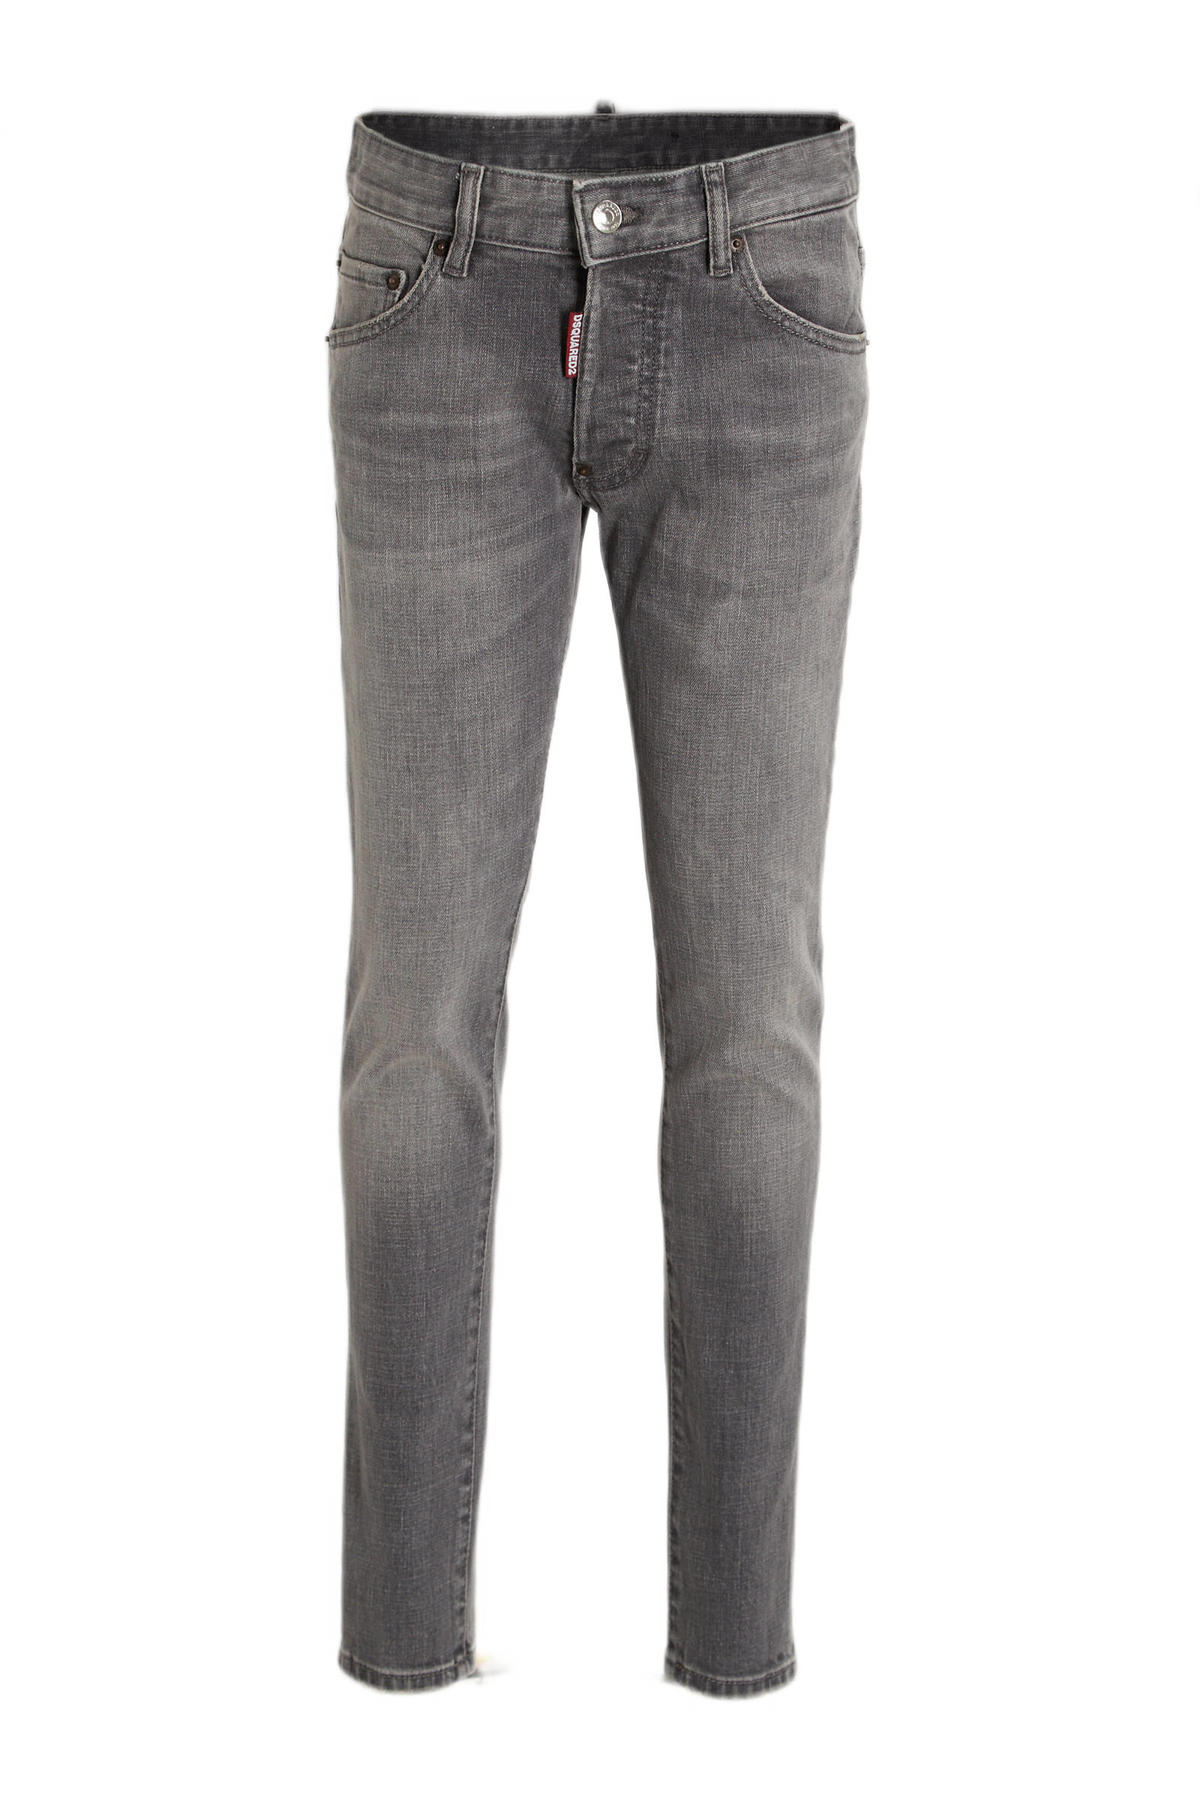 Dsquared skinny jeans SKATER dq2 | kleertjes.com